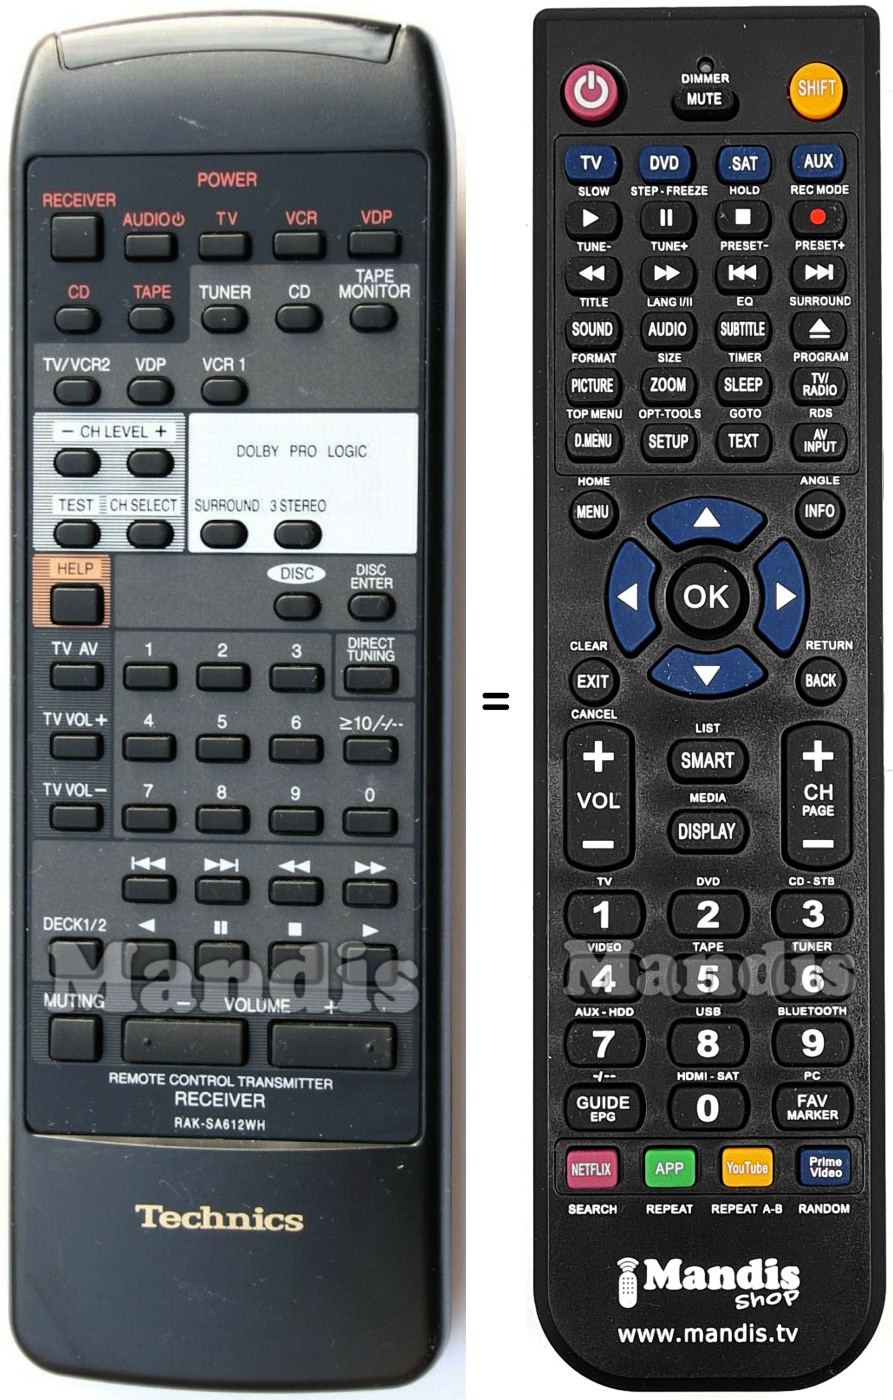 Replacement remote control Technics RAK-SA612WH